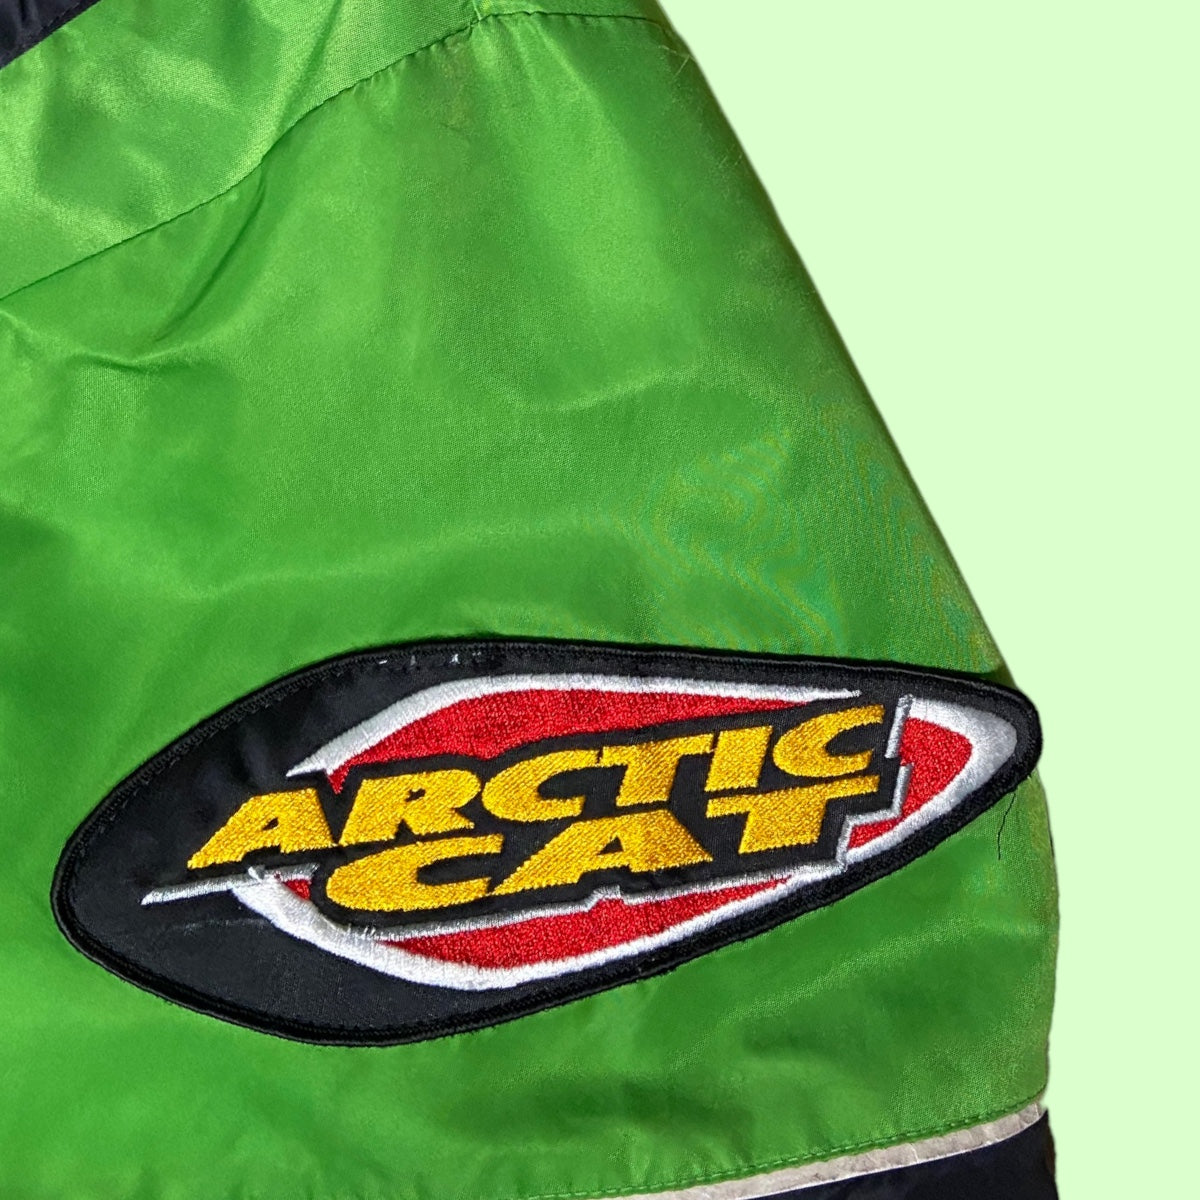 Vintage Arctic racing jacket - L